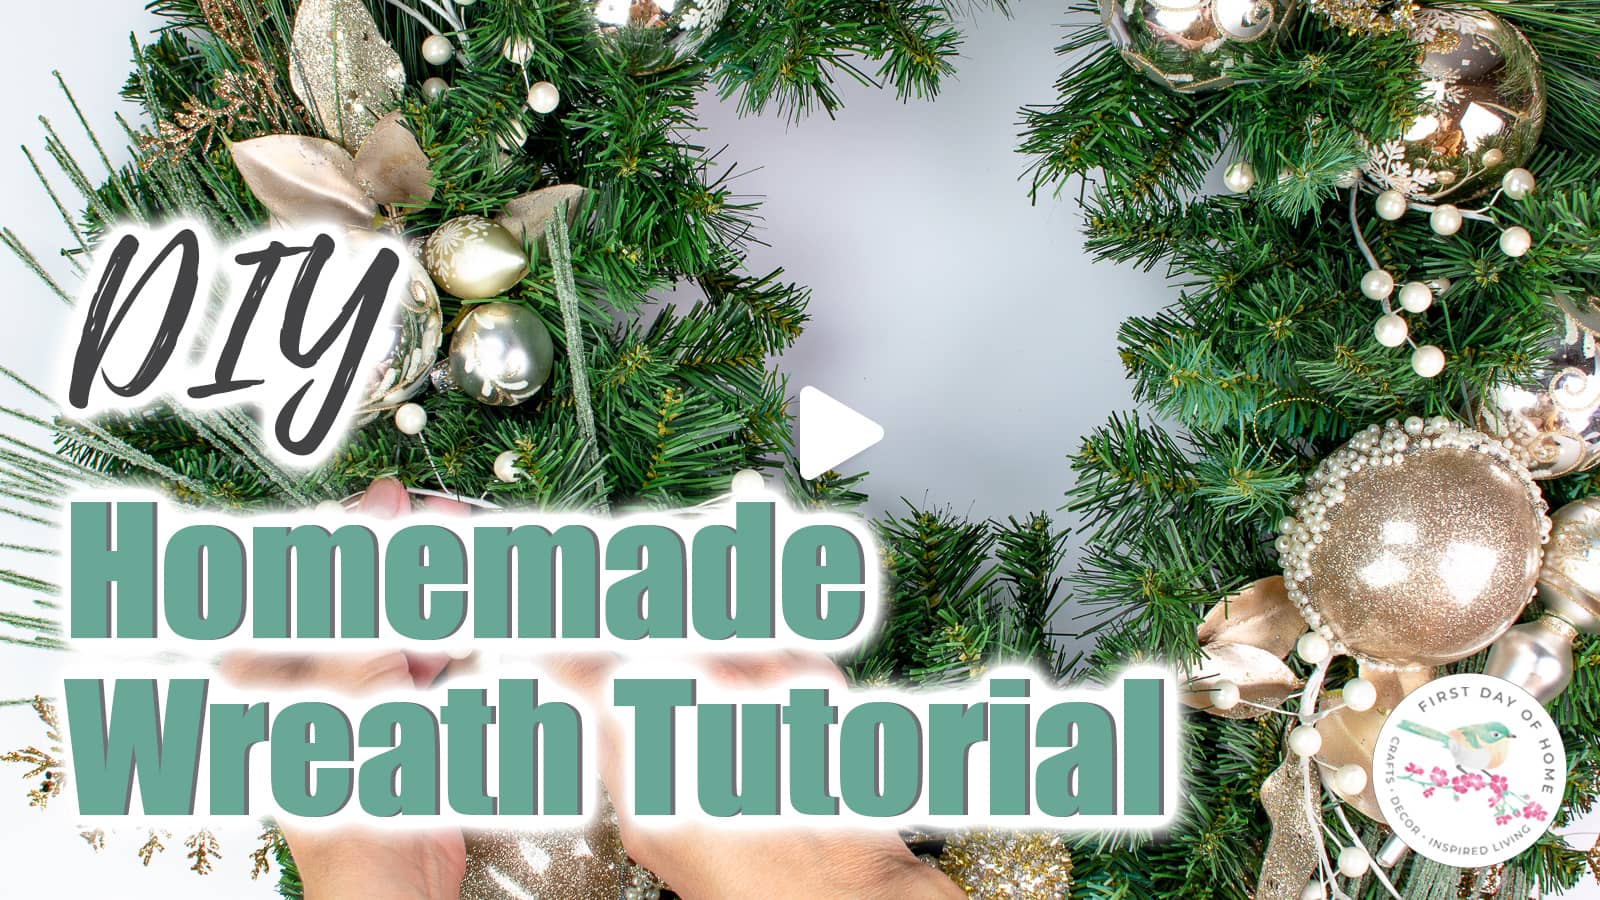 Homemade Christmas Wreath tutorial thumbnail showing hands making Christmas wreath